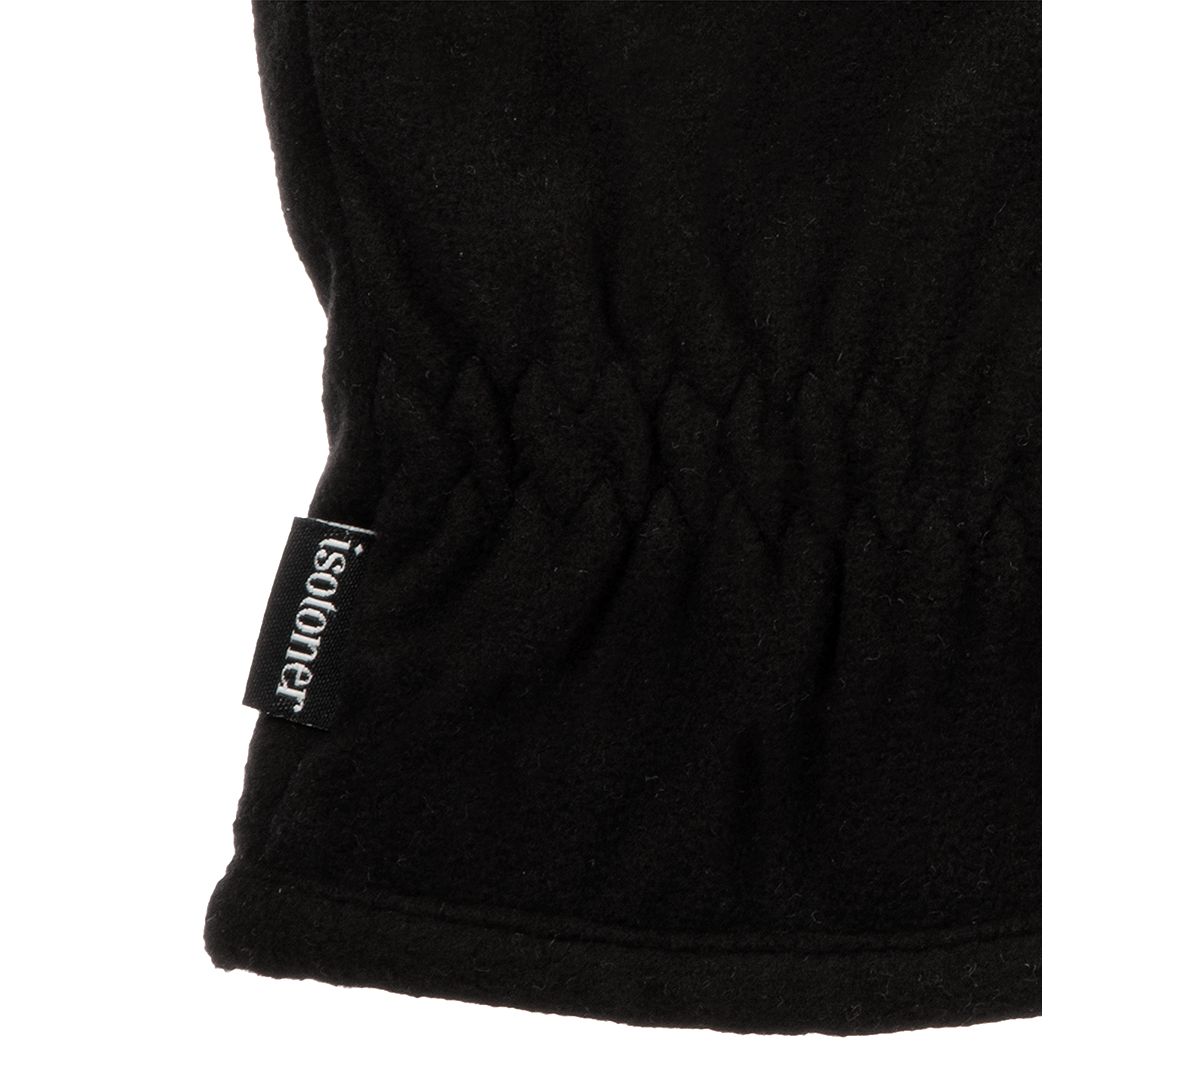 Isotoner Signature Smartdri Fleece Smartouch Gloves Black